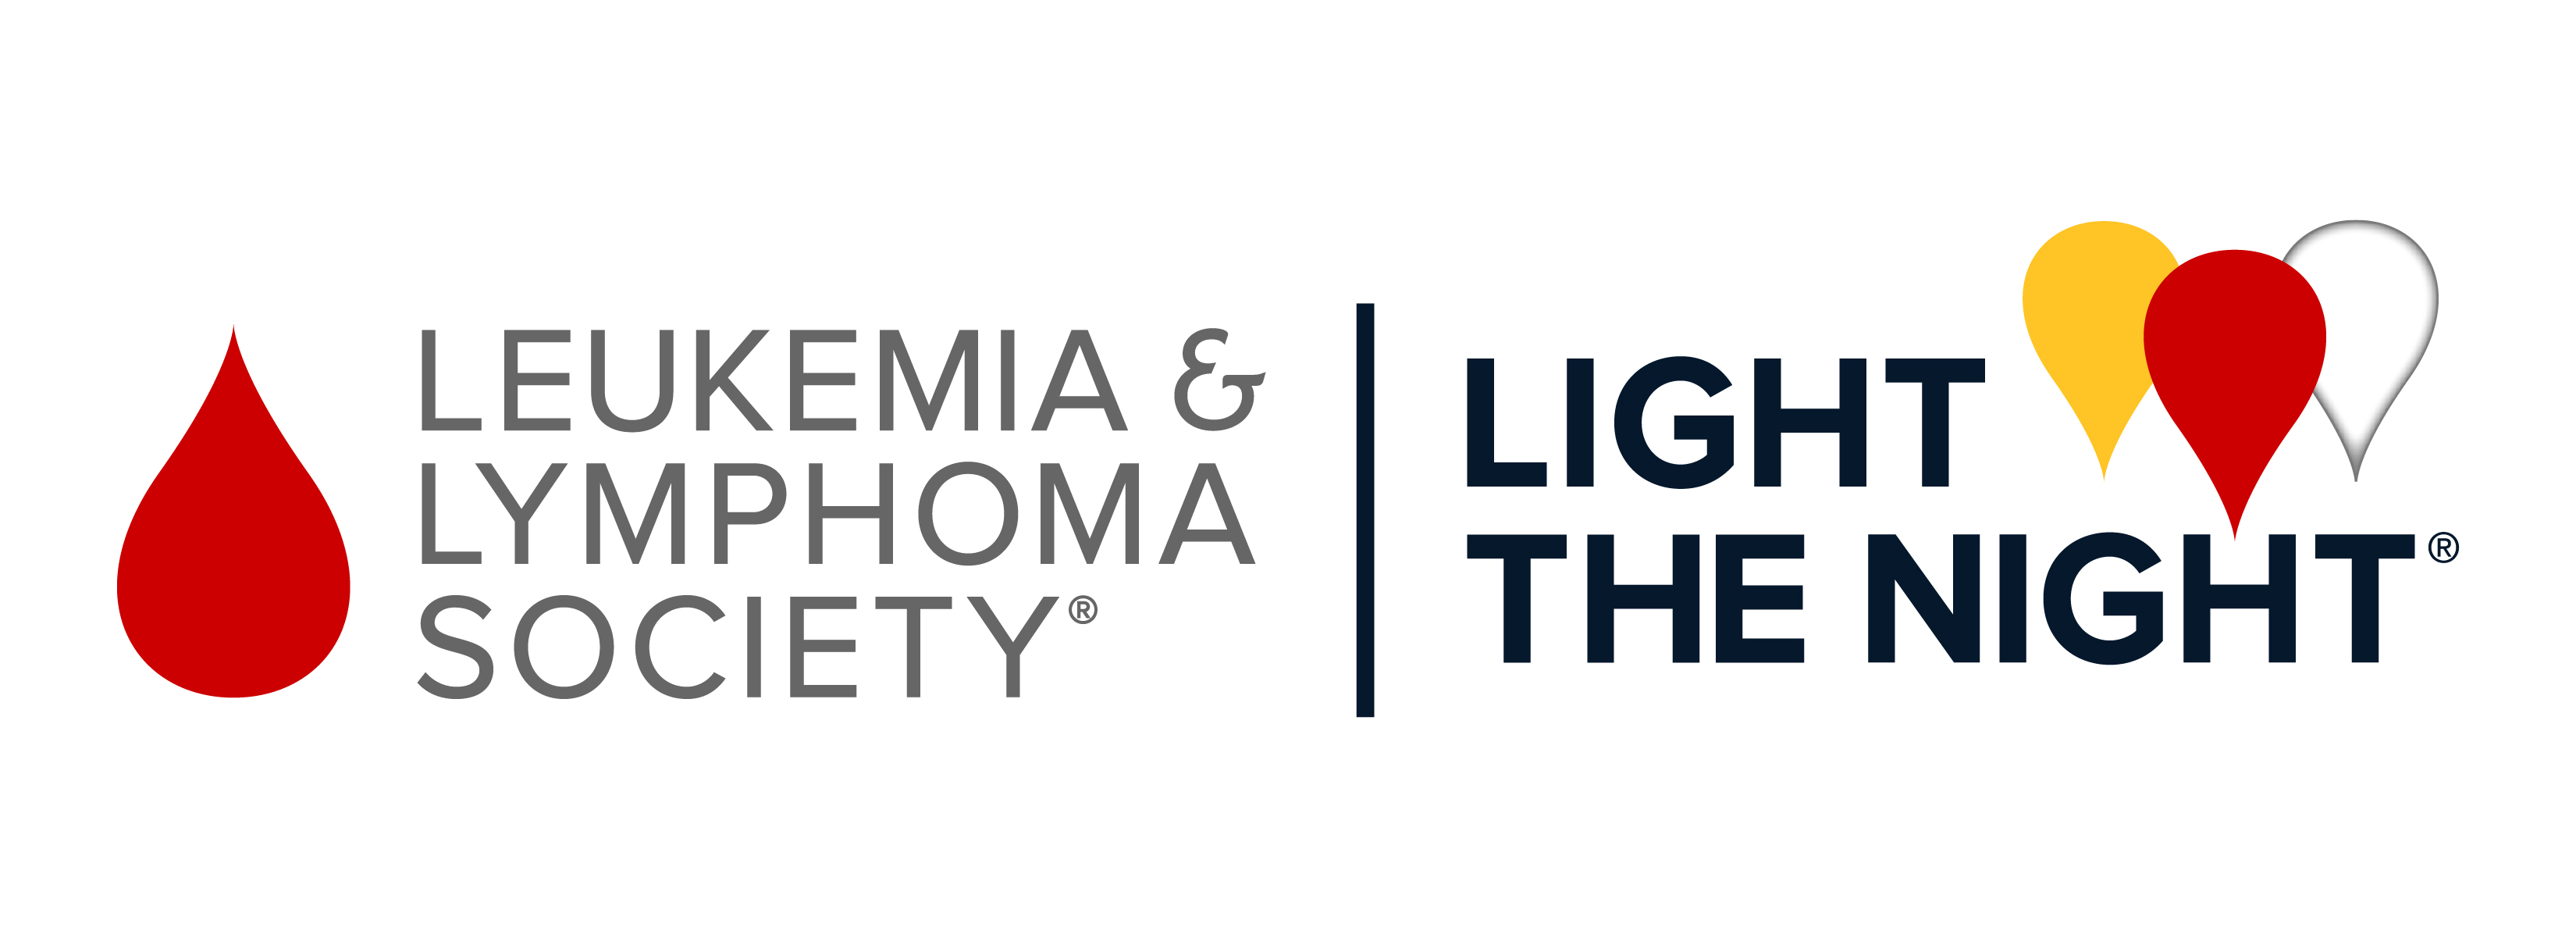 Light The - Leukemia Lymphoma Society San Francisco Interfaith Council